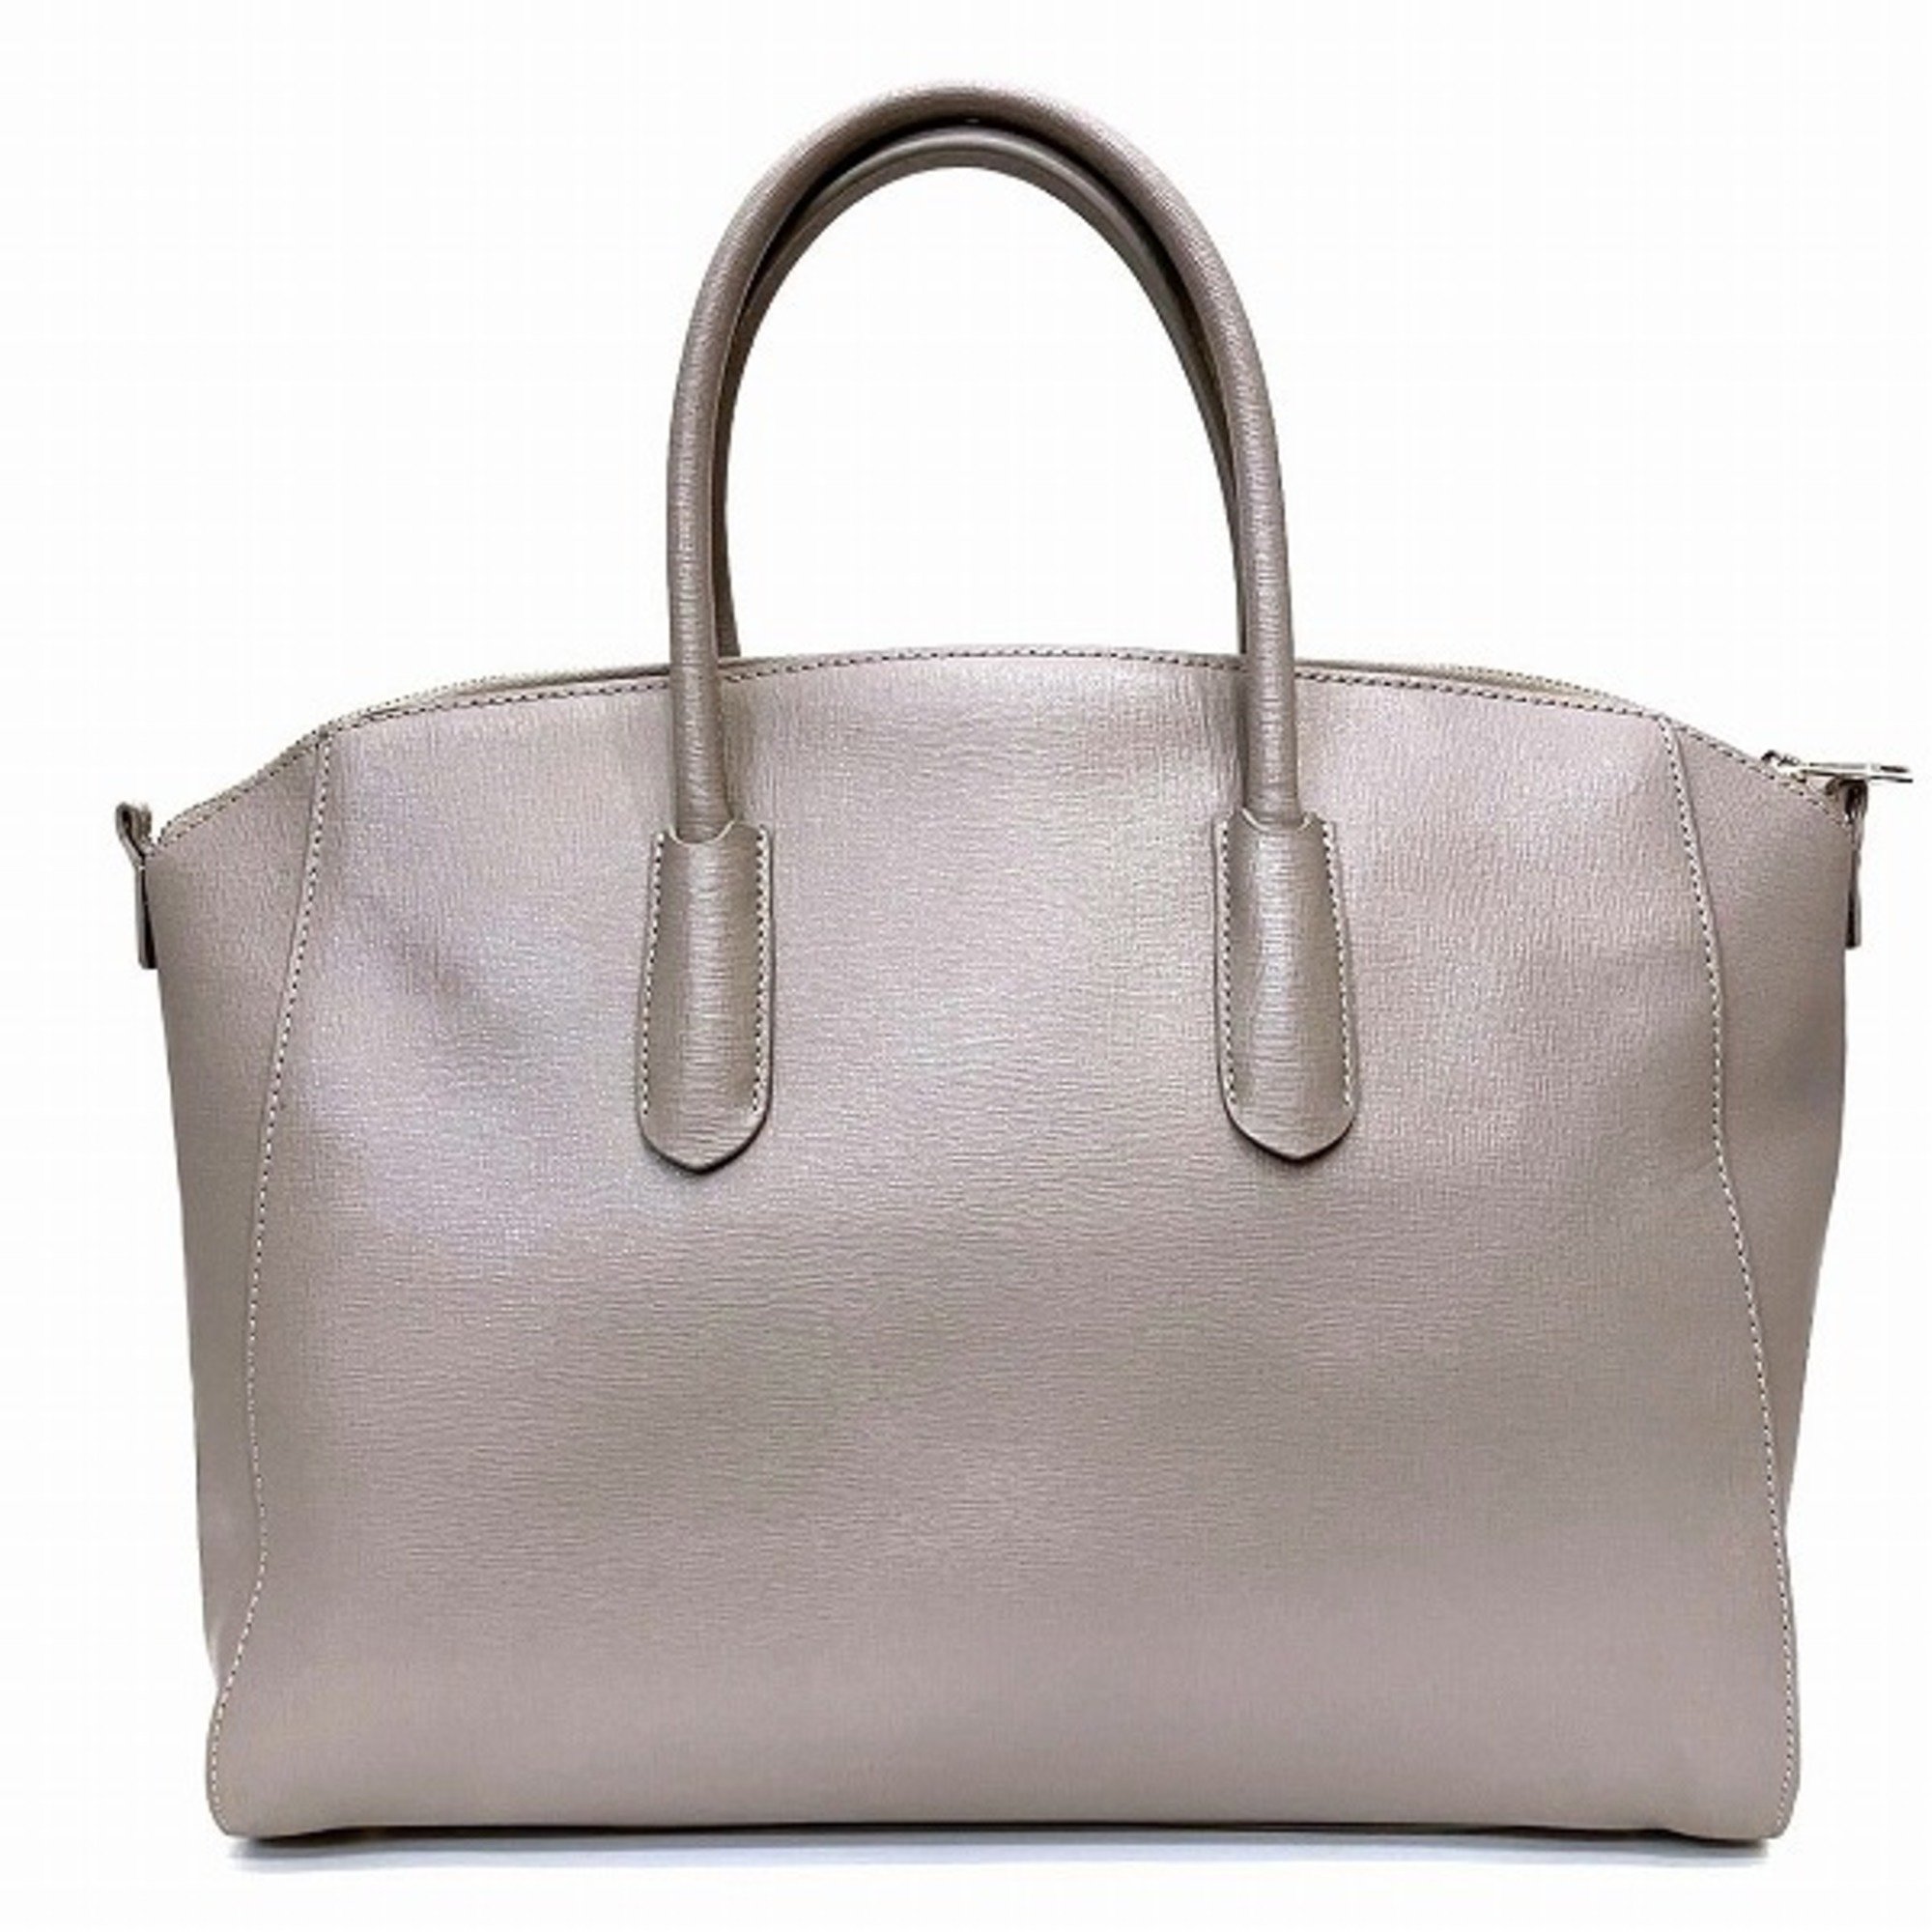 FURLA handbag leather bag tote business ladies